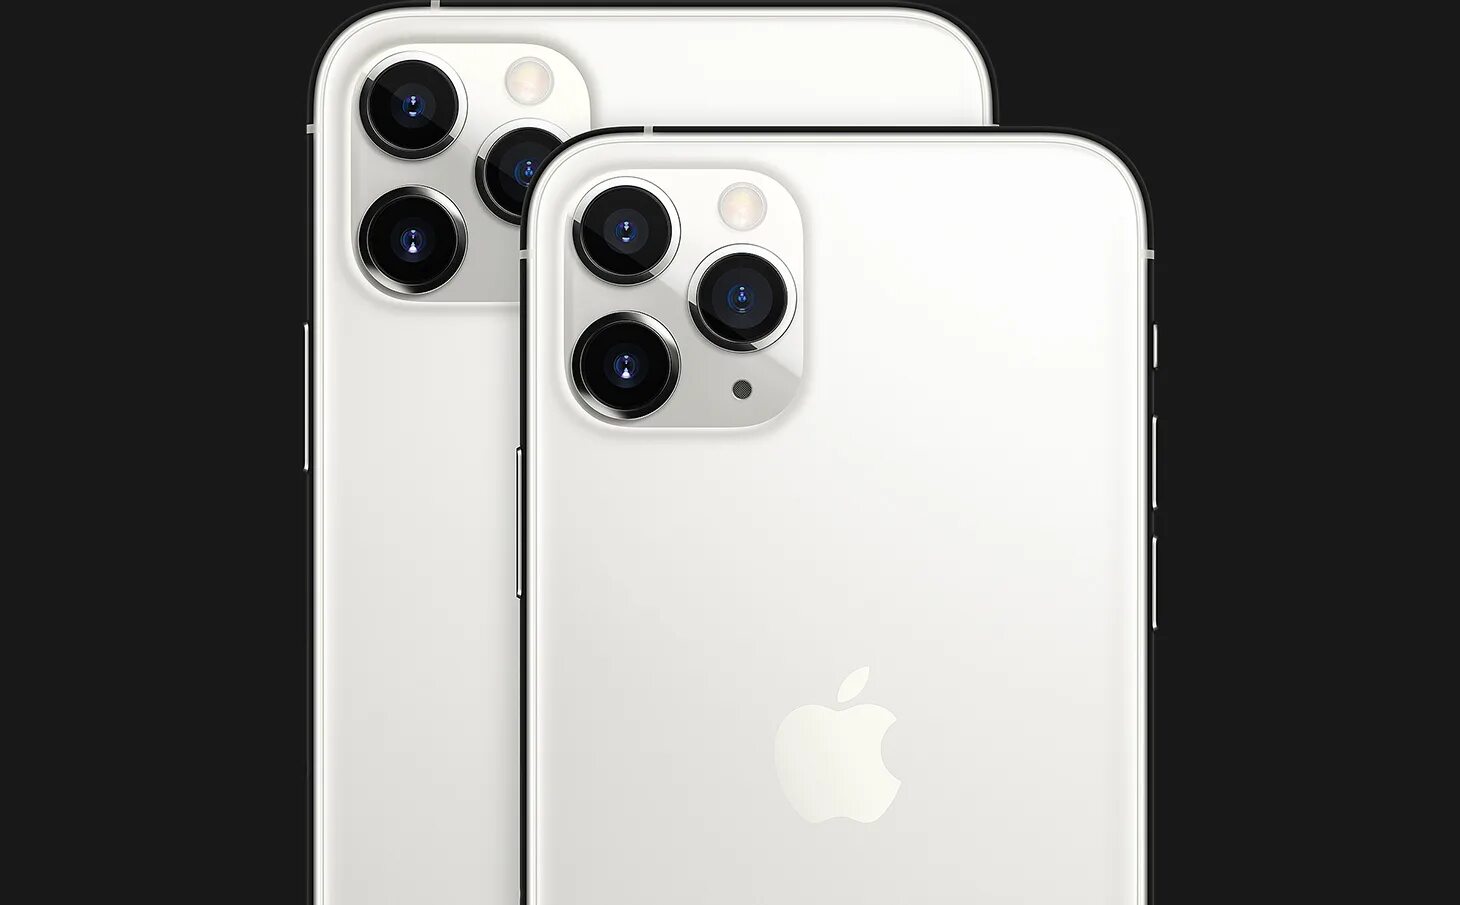 Активированный айфон 11. Iphone 11 Pro Max Silver. Айфон 12 Промакс белый. Айфон 11 Промакс белый. Айфон 13 Промакс белый.